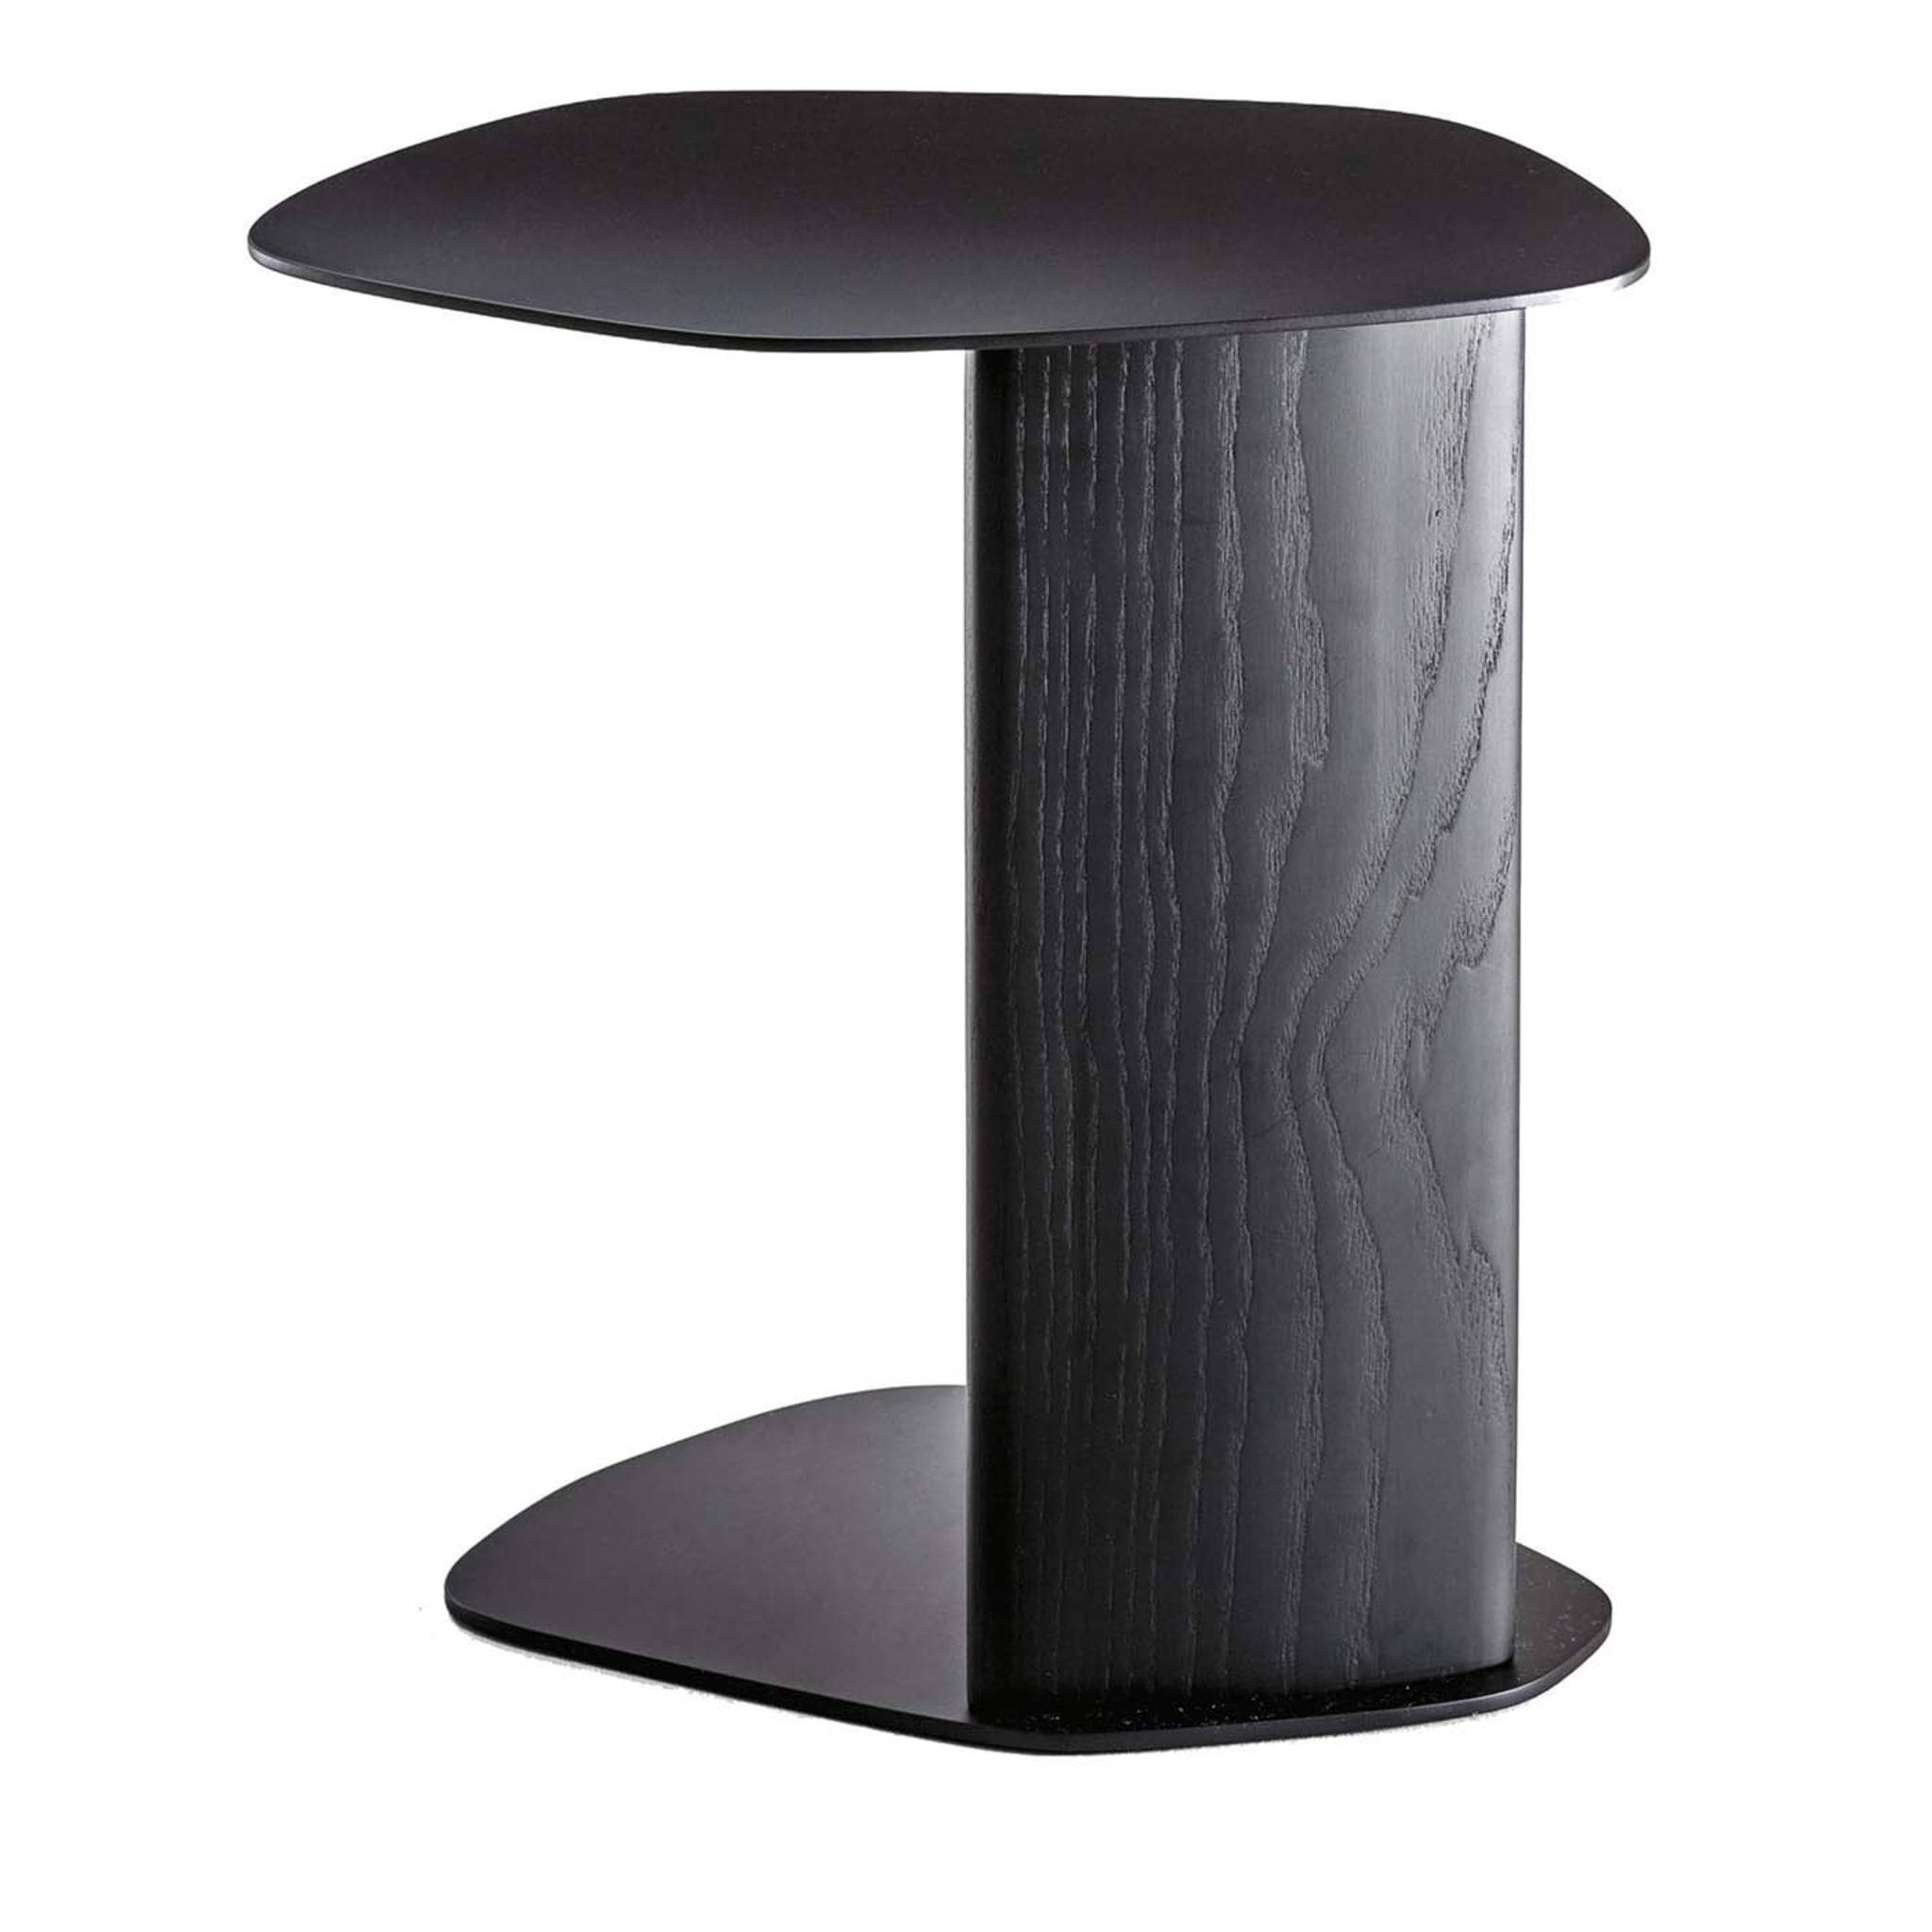 Keisho Modern Black Ash Wood Side Table for Living Room - Main view